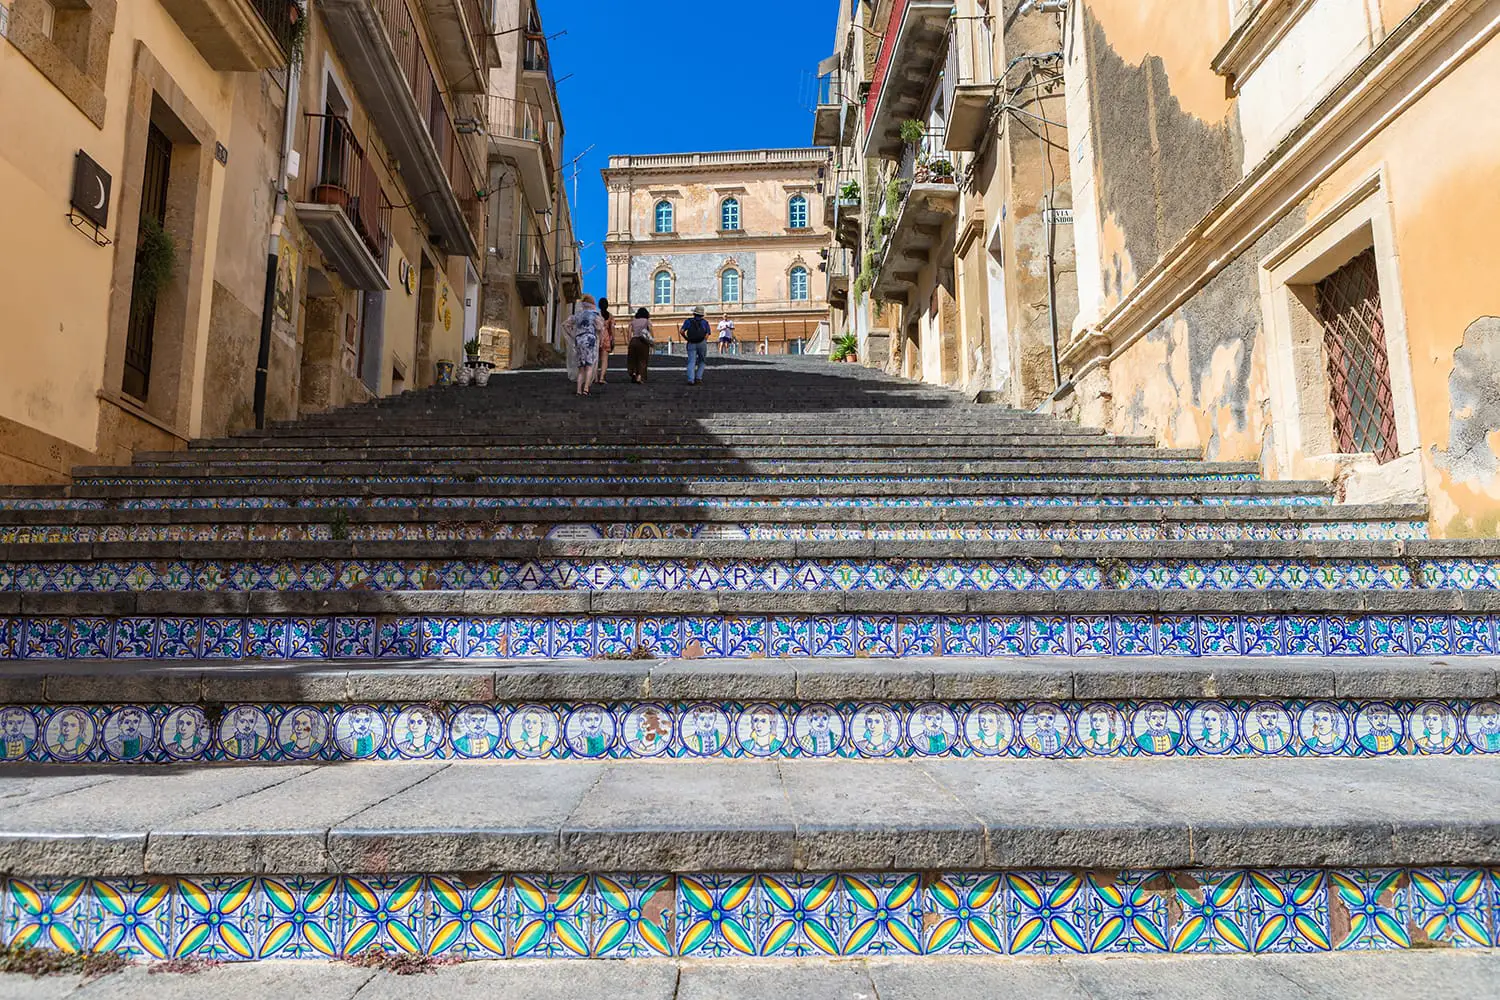 Staircase of Santa Maria del Monte. Caltagirone, Sicily, Italy.